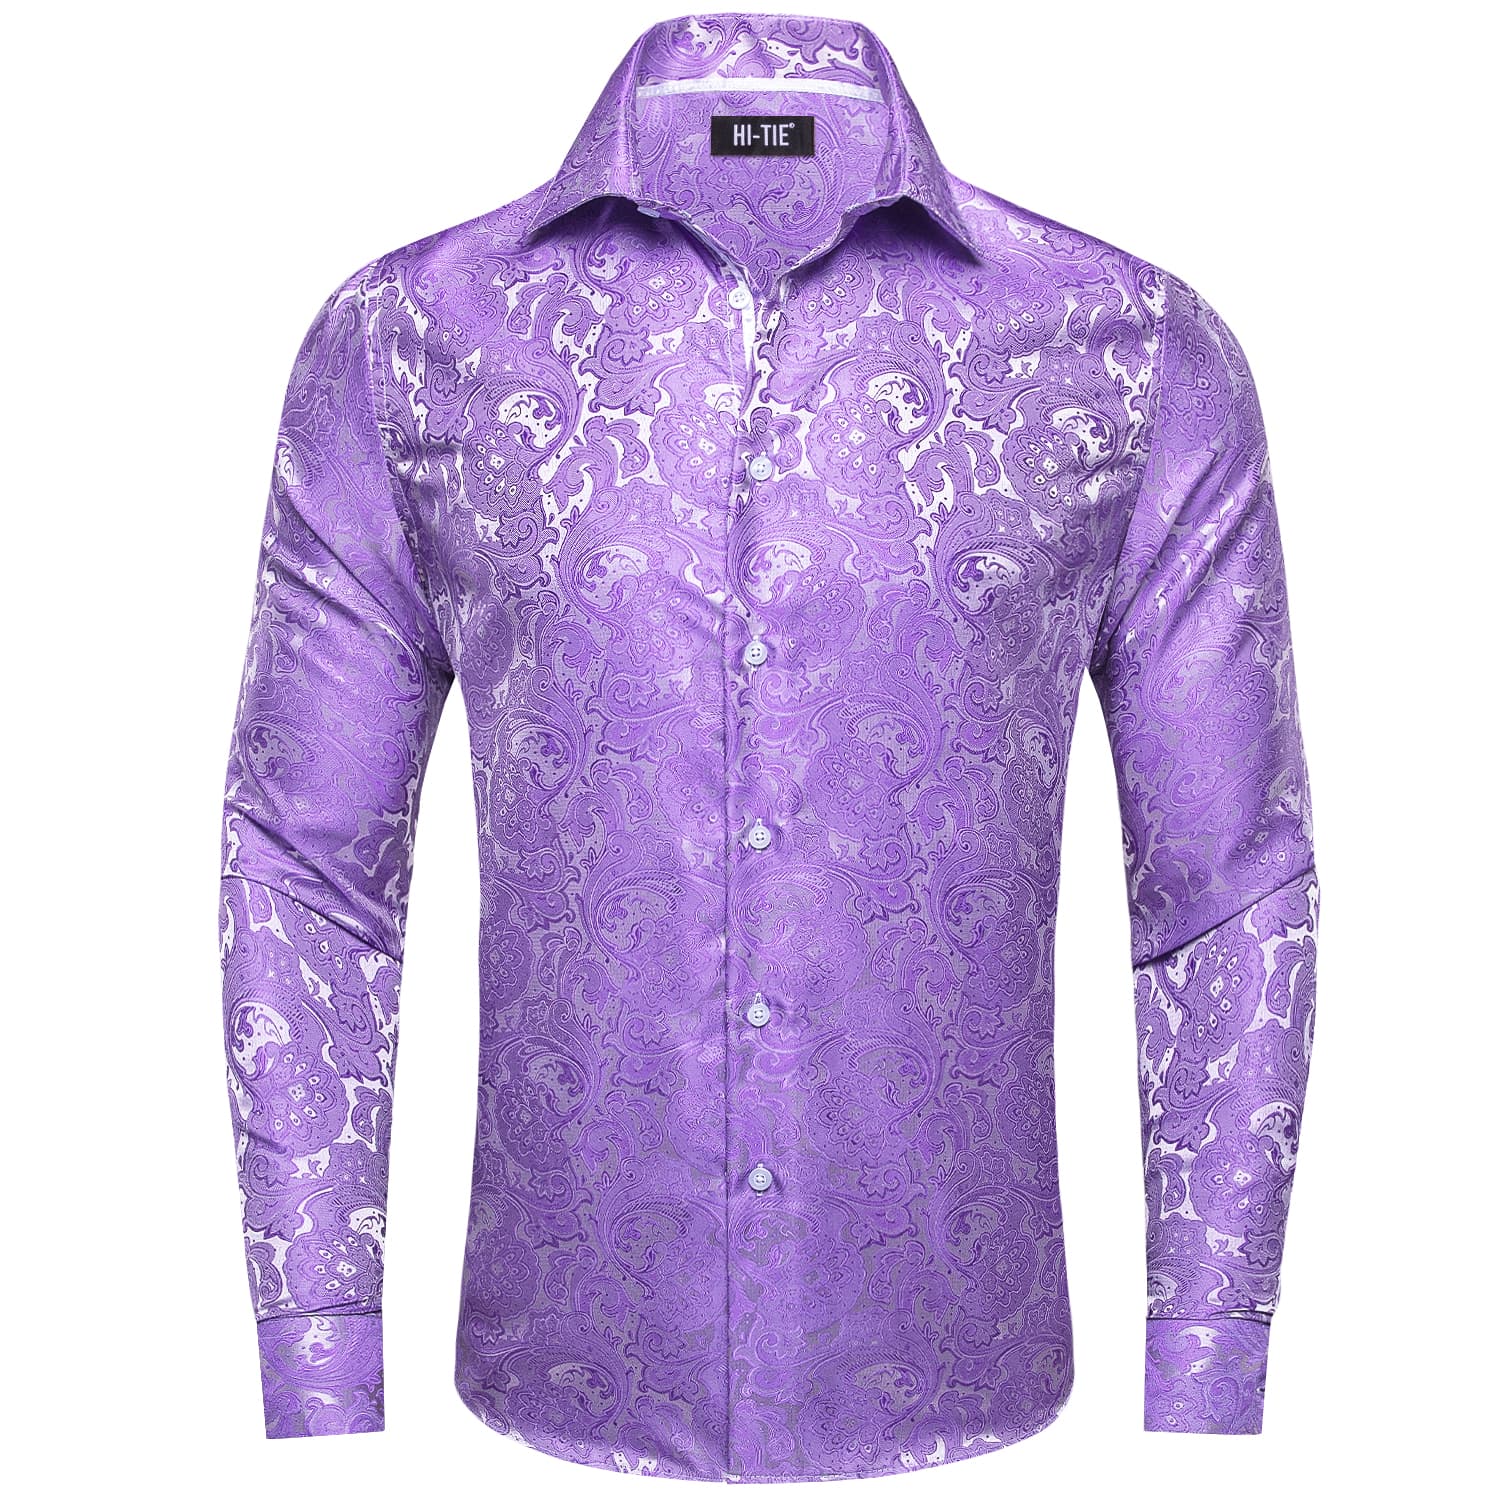 Hi-Tie Paisley Shirt Amethyst Purple Jacquard Mens Button Down Shirt